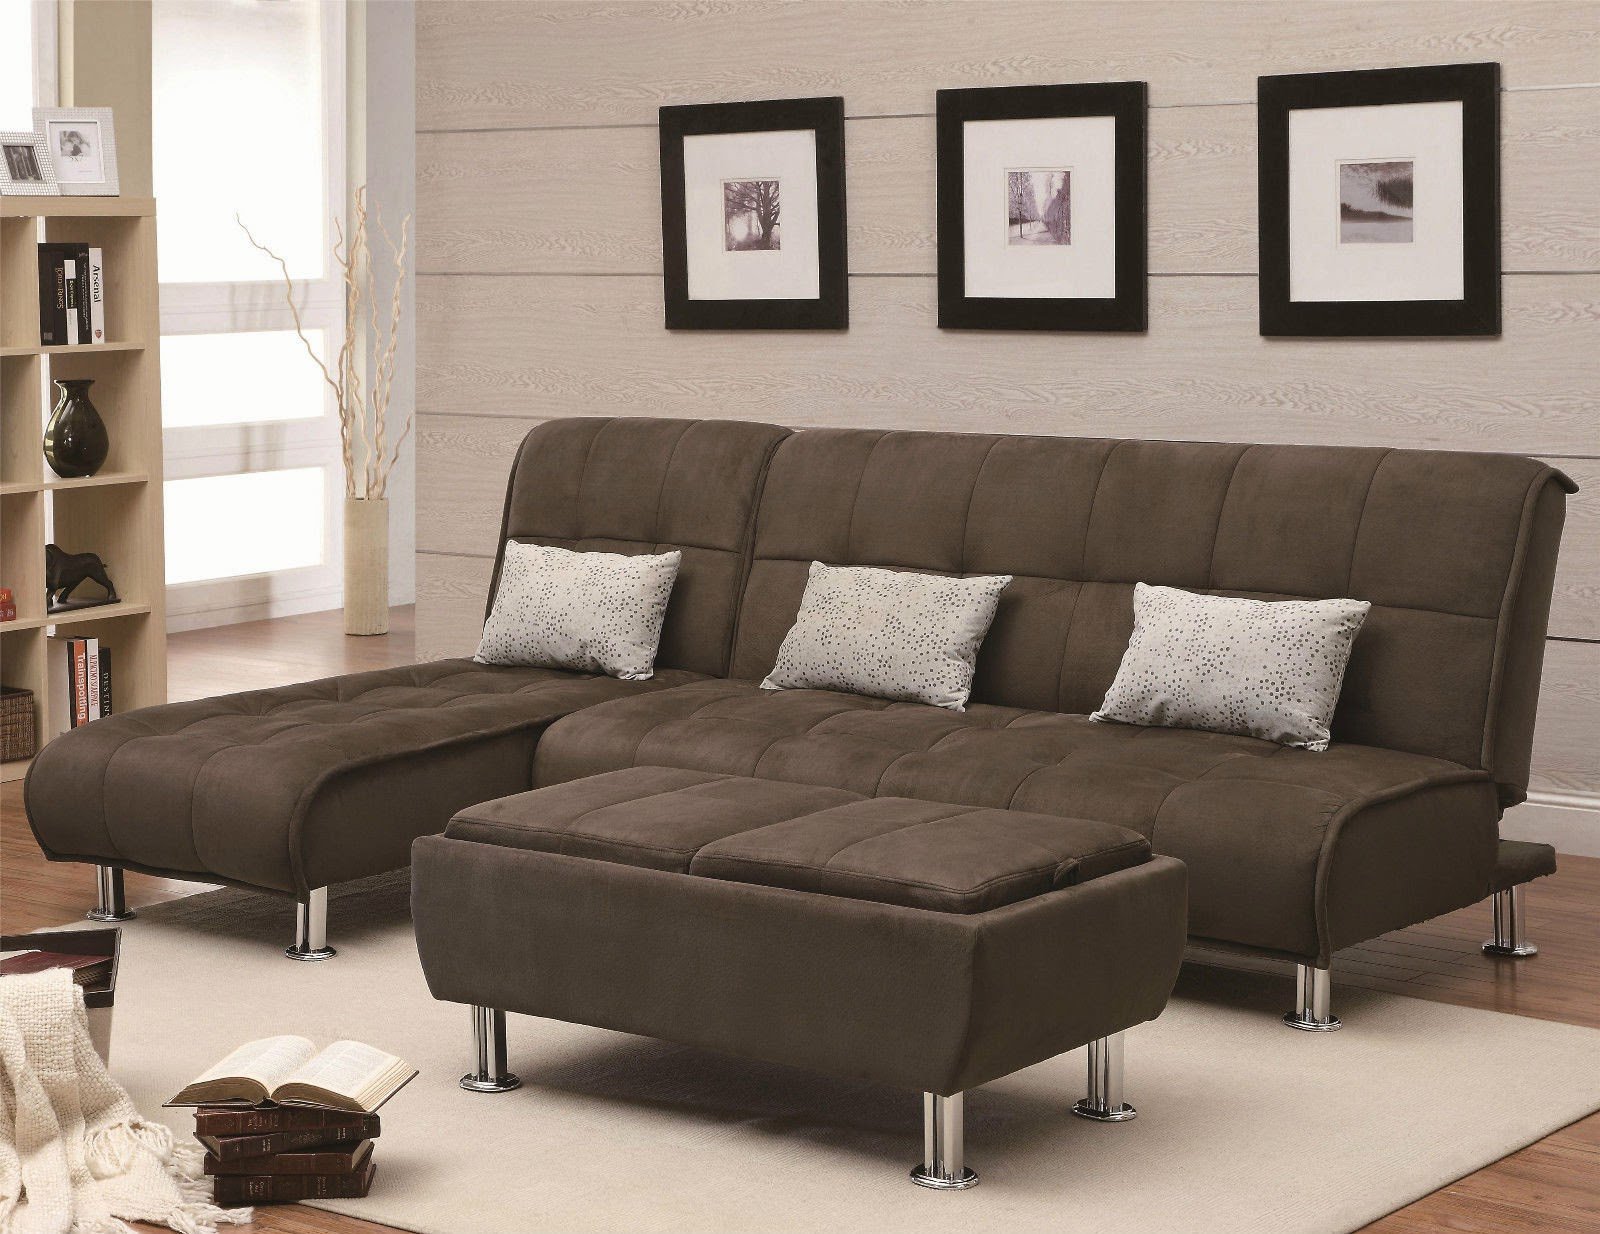 Comfortable Elegant Living Room Elegant Furniture fortable Sectionals sofa for Elegant Living Room Furniture Design